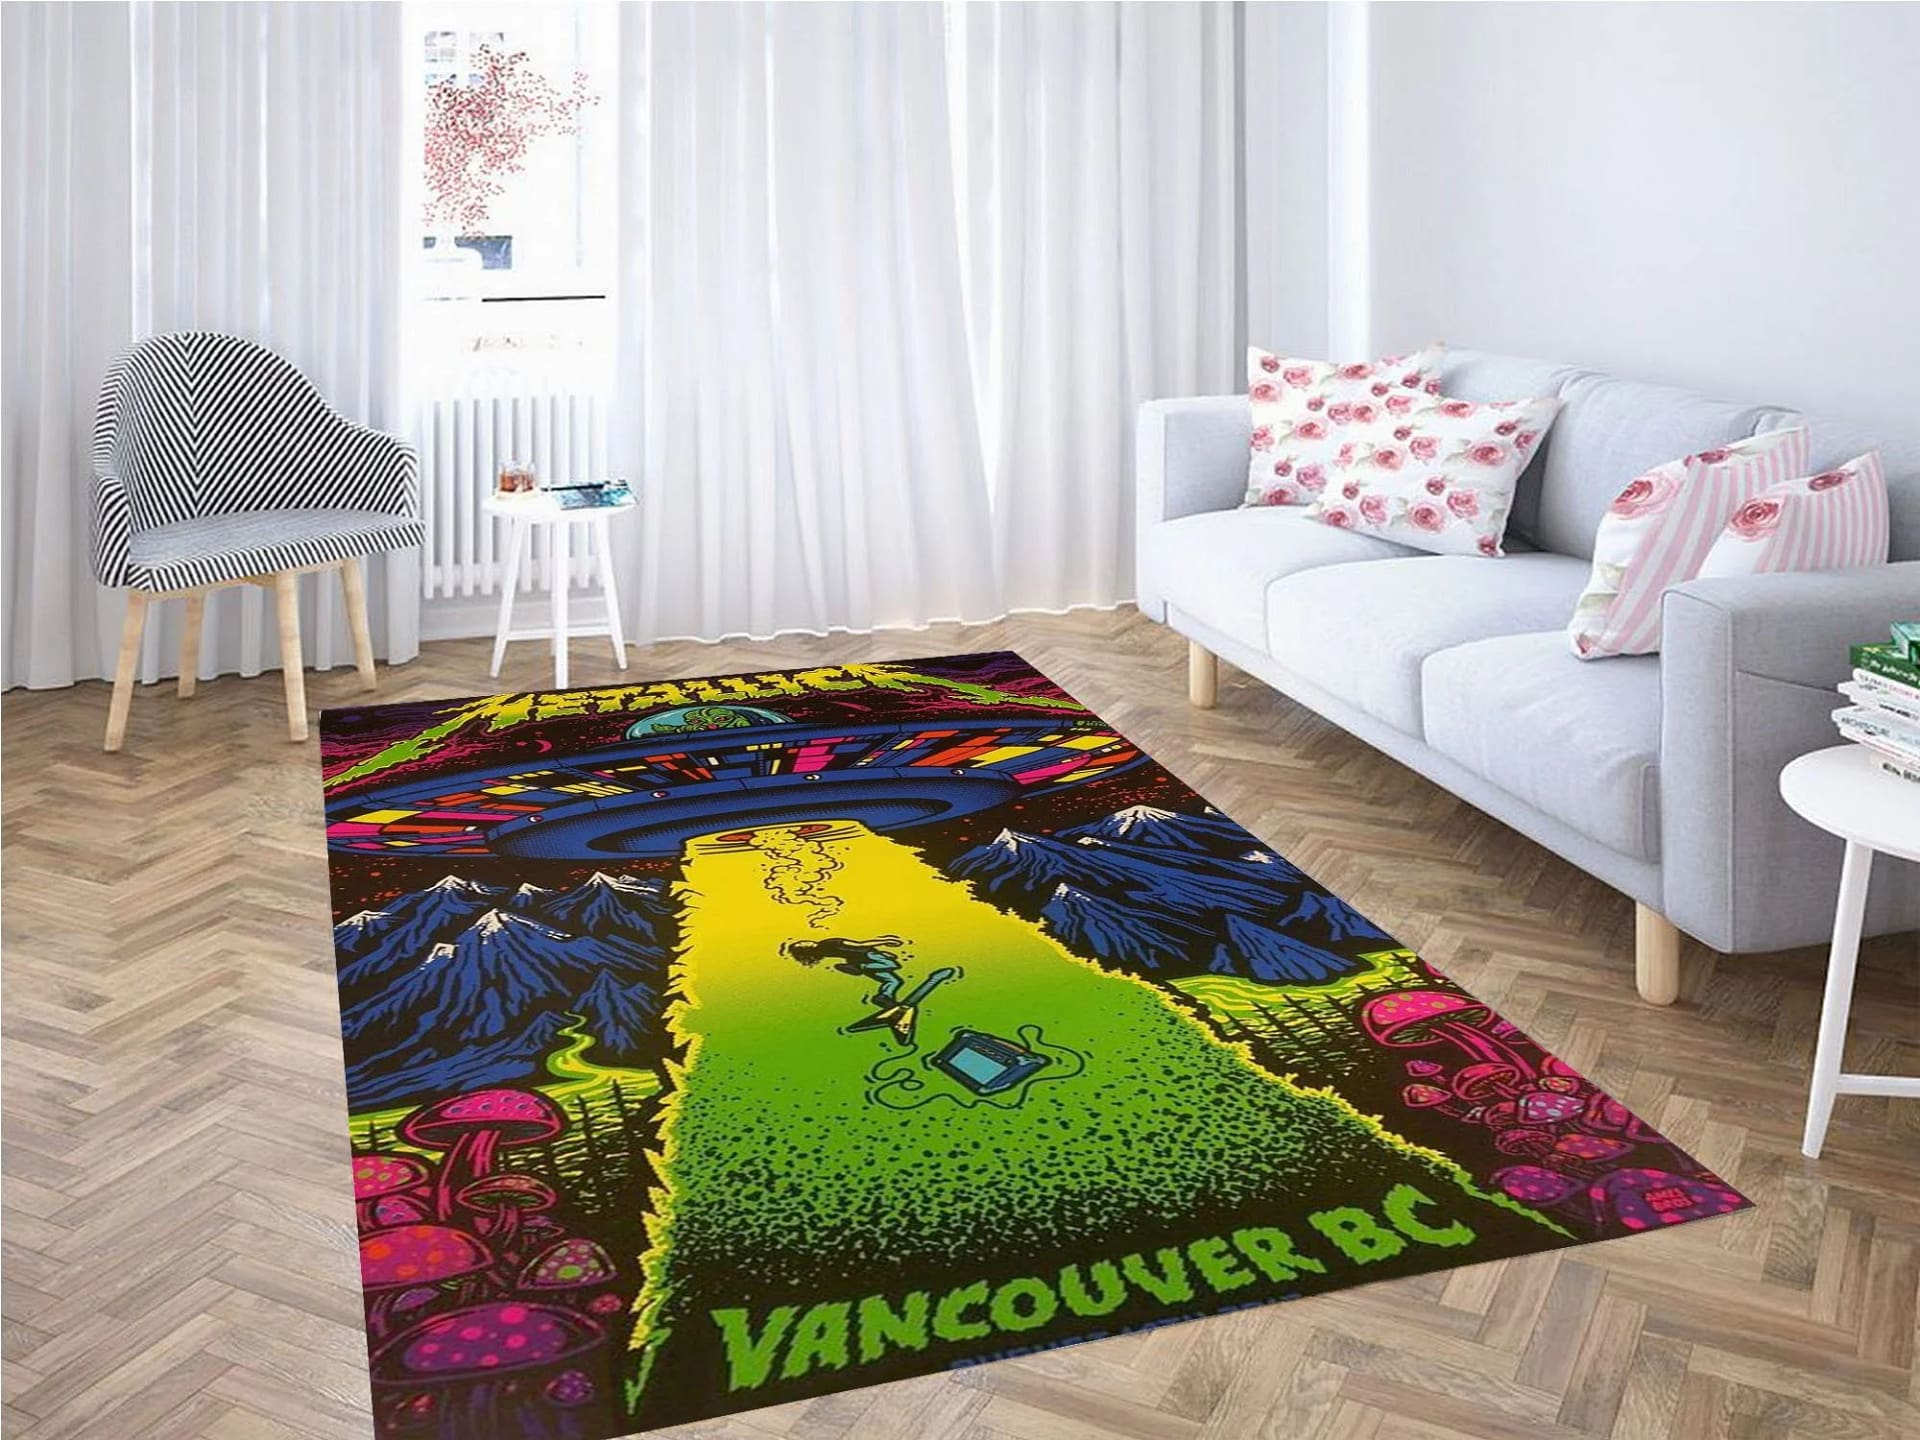 Metallica Vancouver Concert Poster Carpet Rug